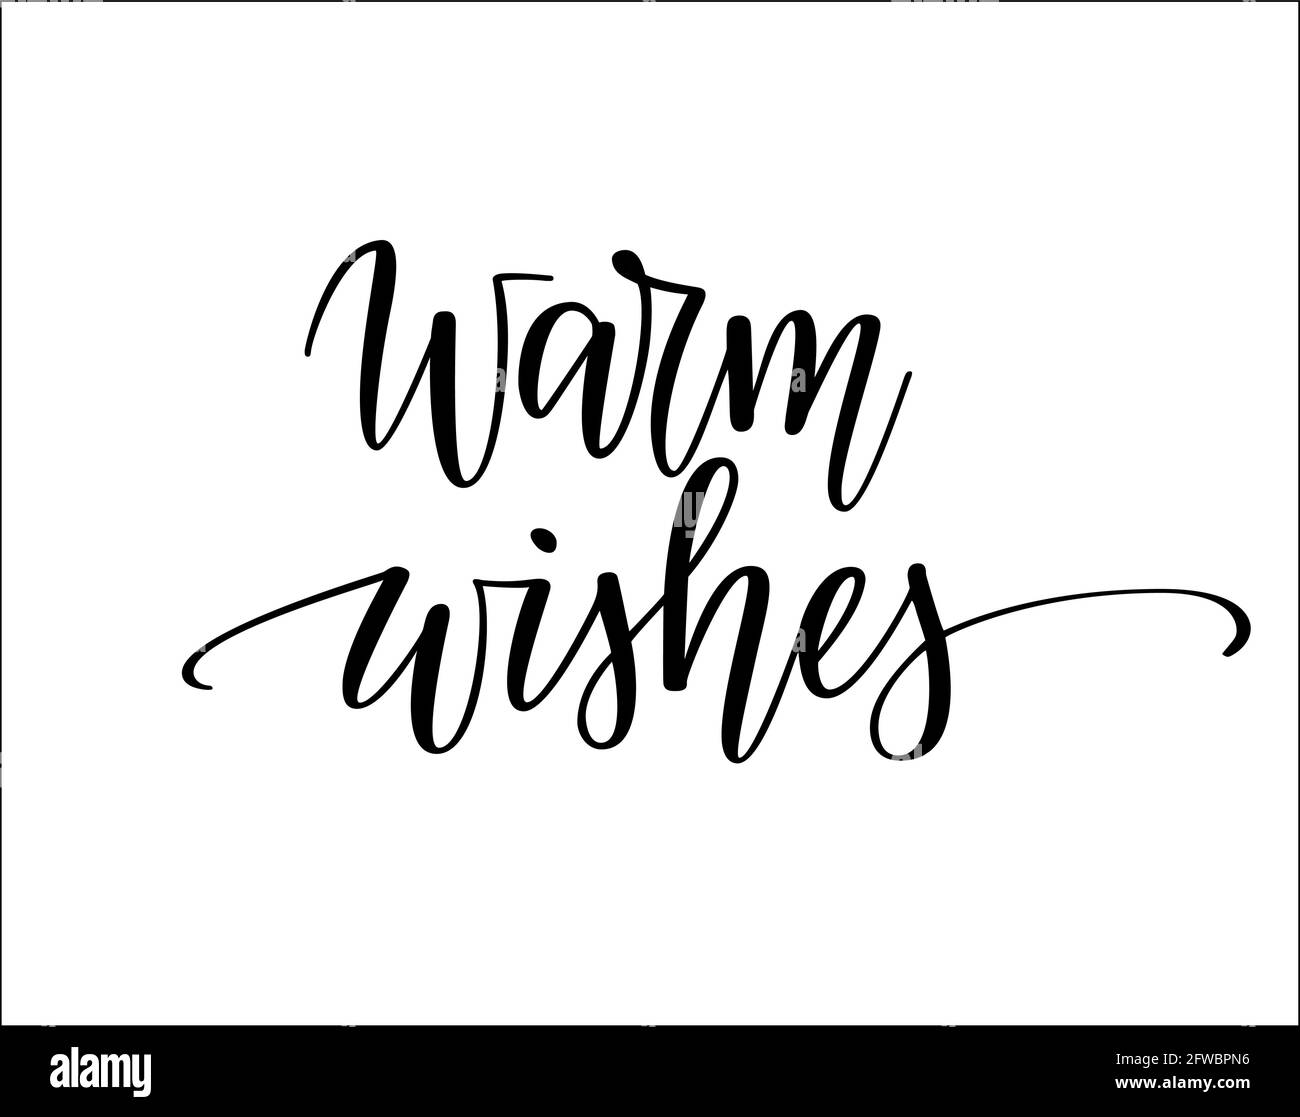 Warm wishes vector Christmas seasonal greeting design Stock Vector ...